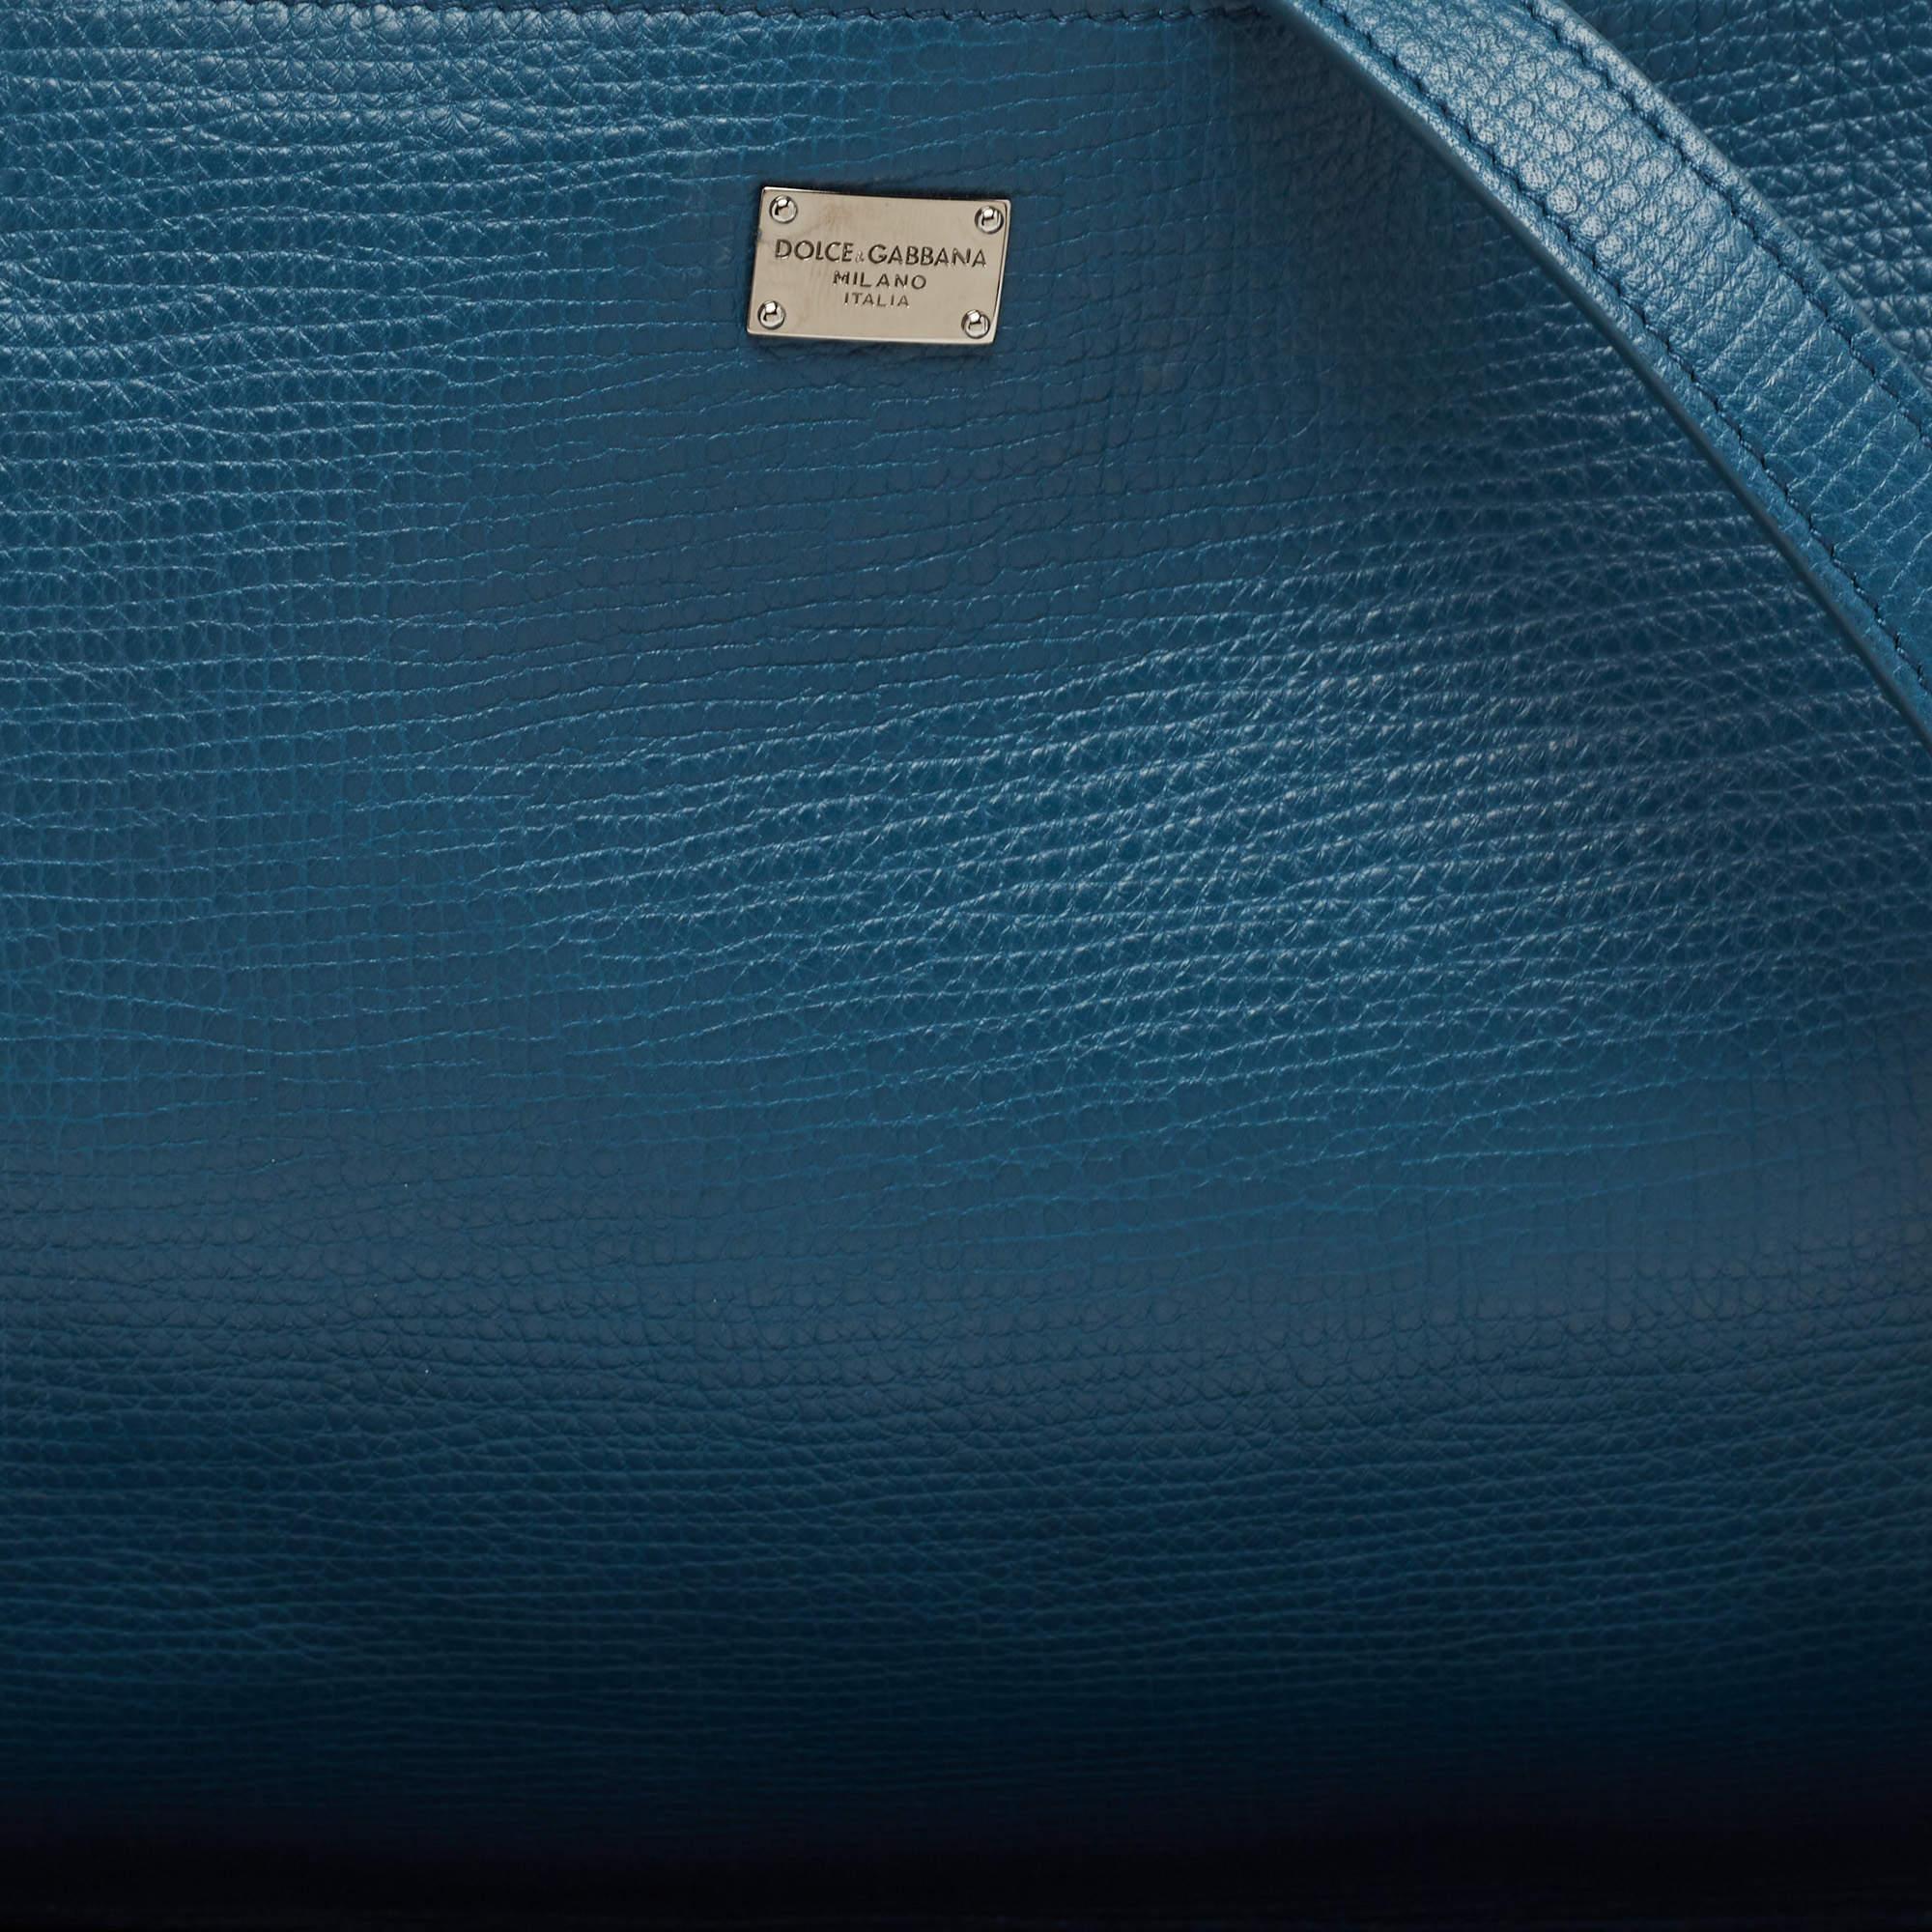 Dolce & Gabbana Blue Leather Oversized Clutch 1